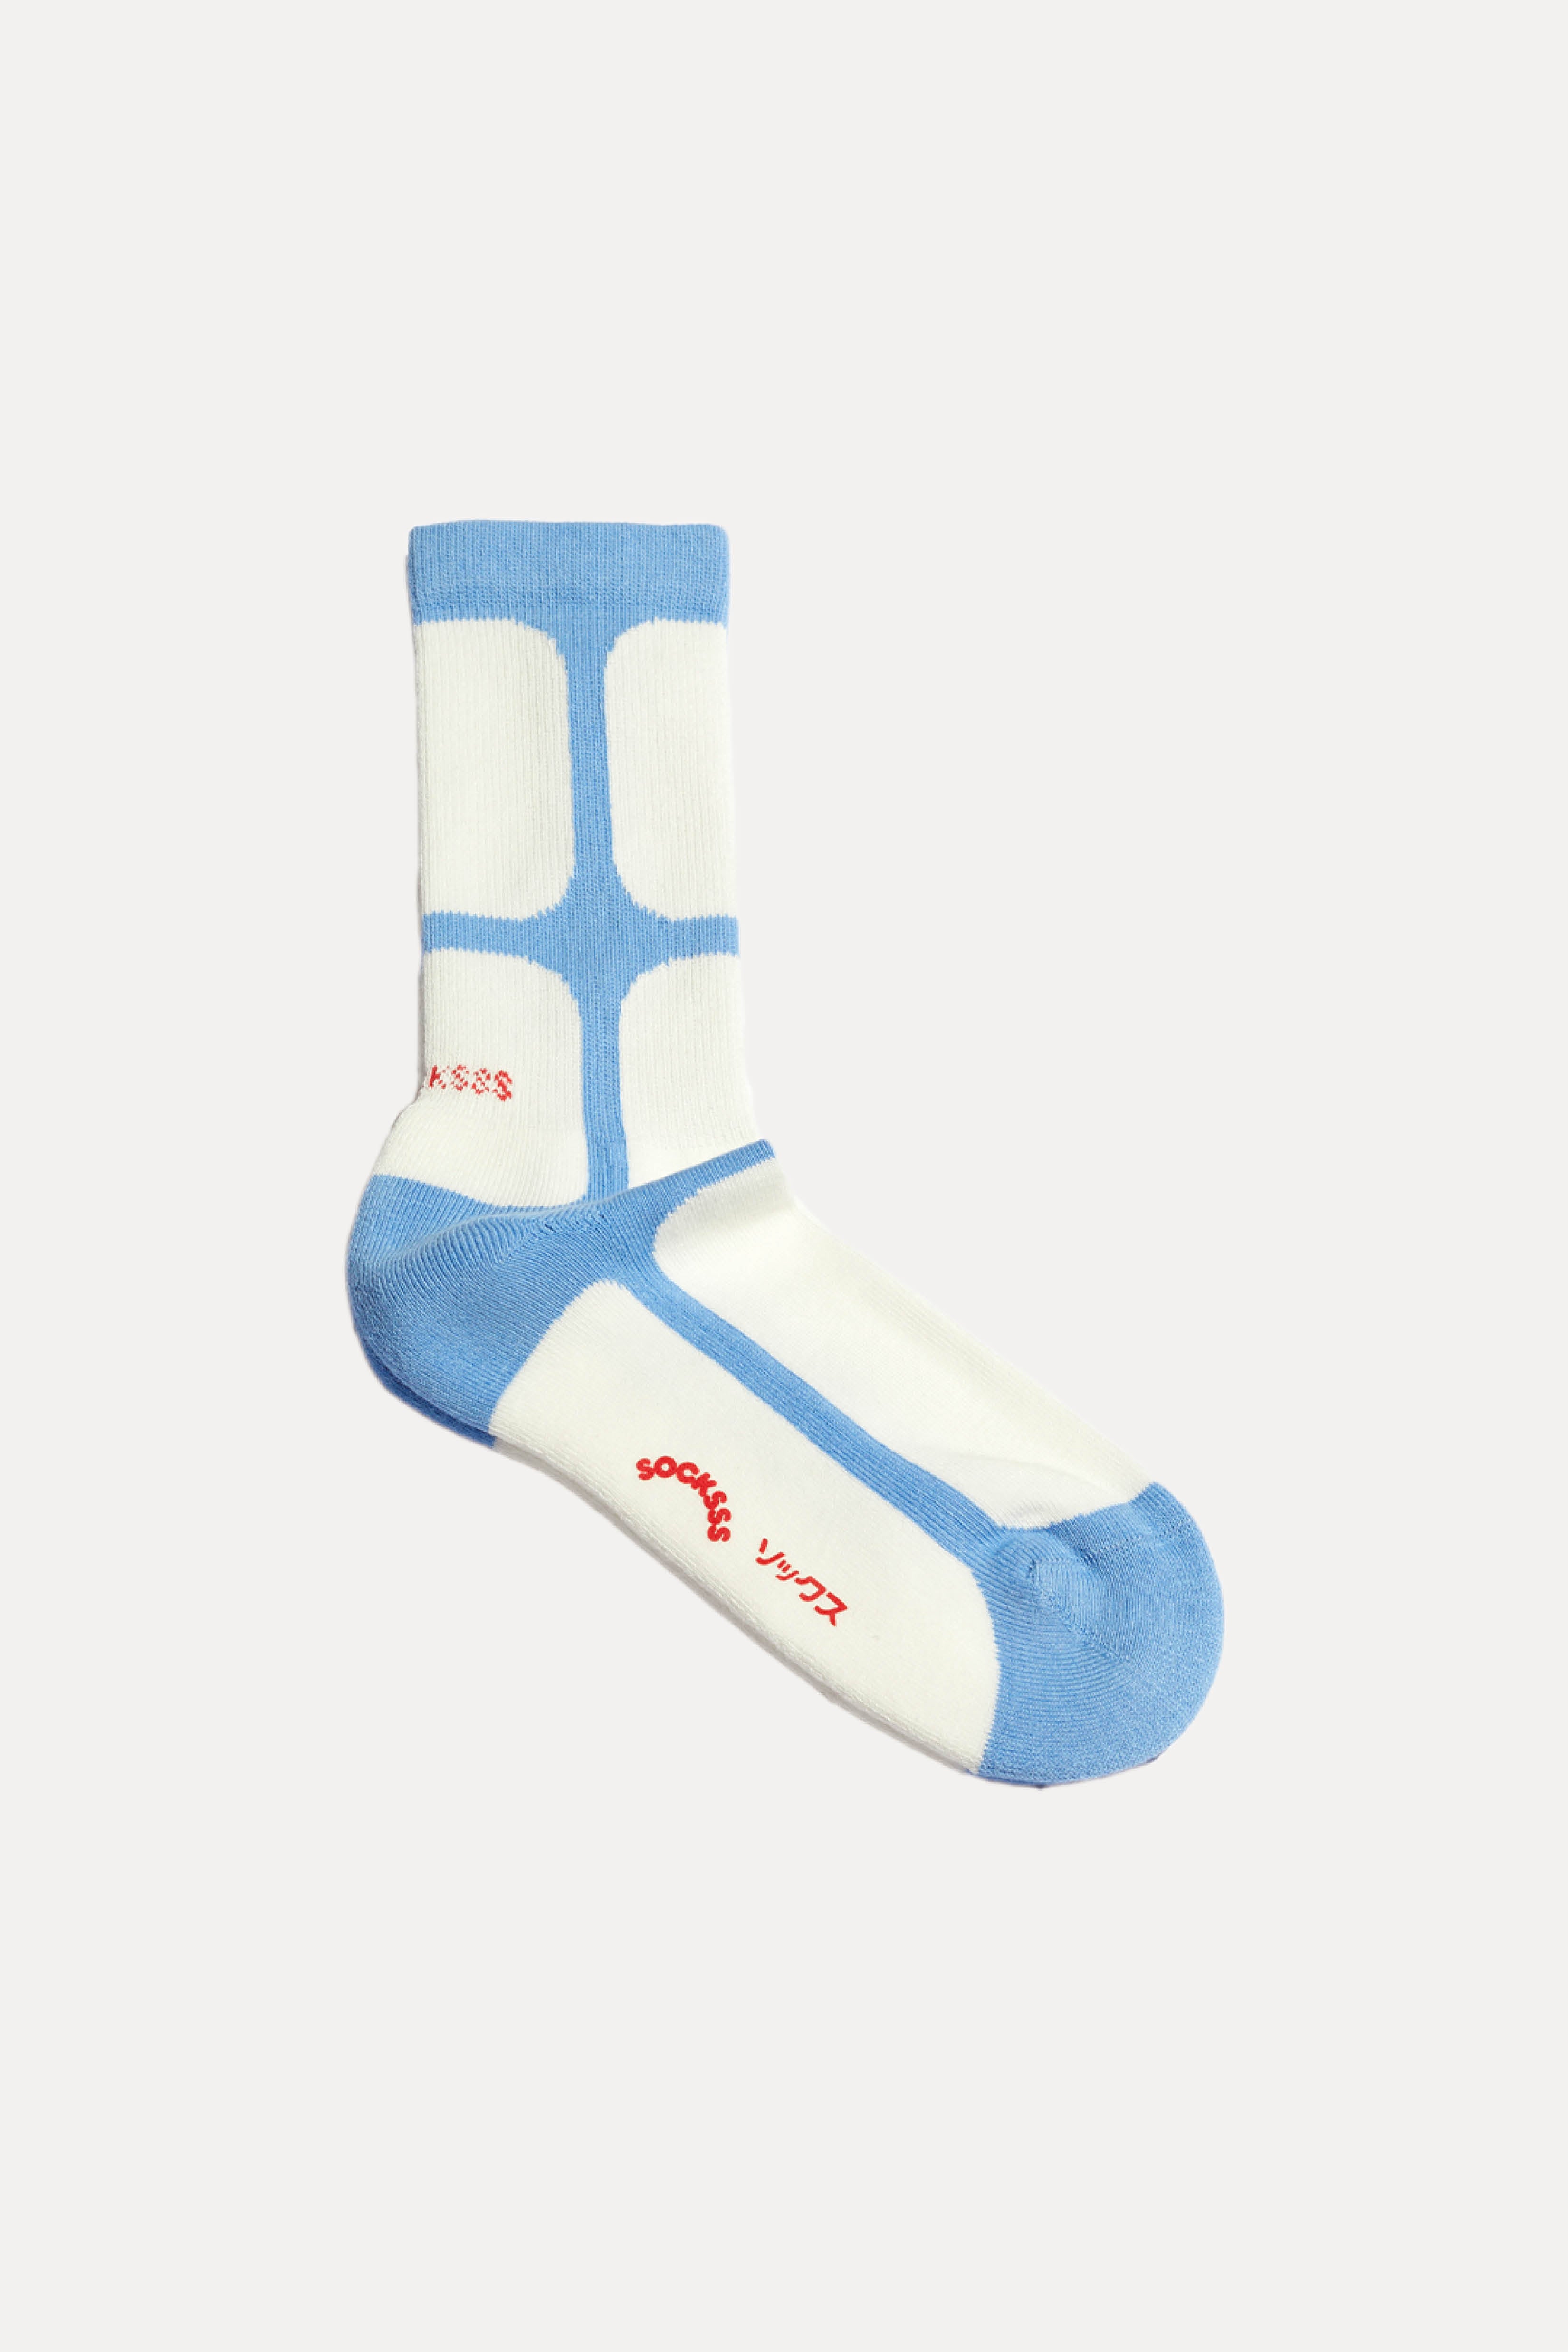 Socksss | Ice cube blue